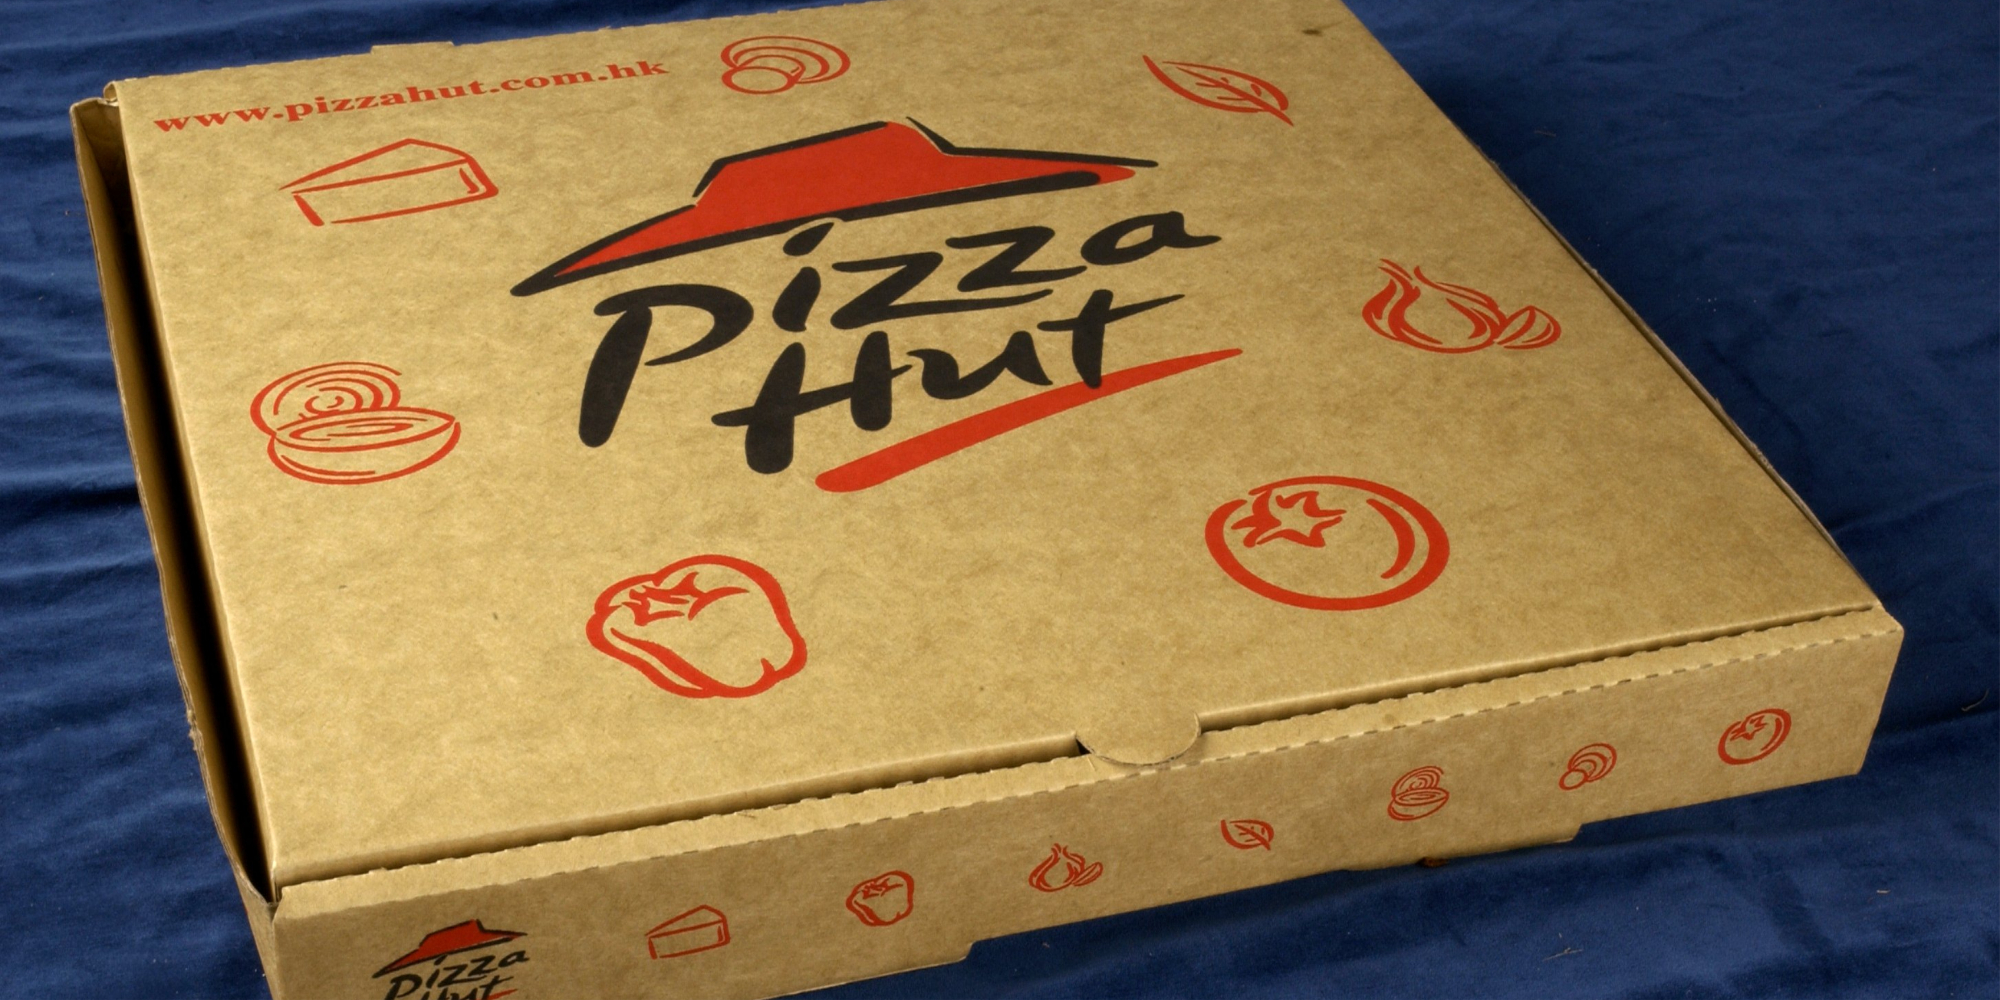 A photograph of a Pizza Hut box.